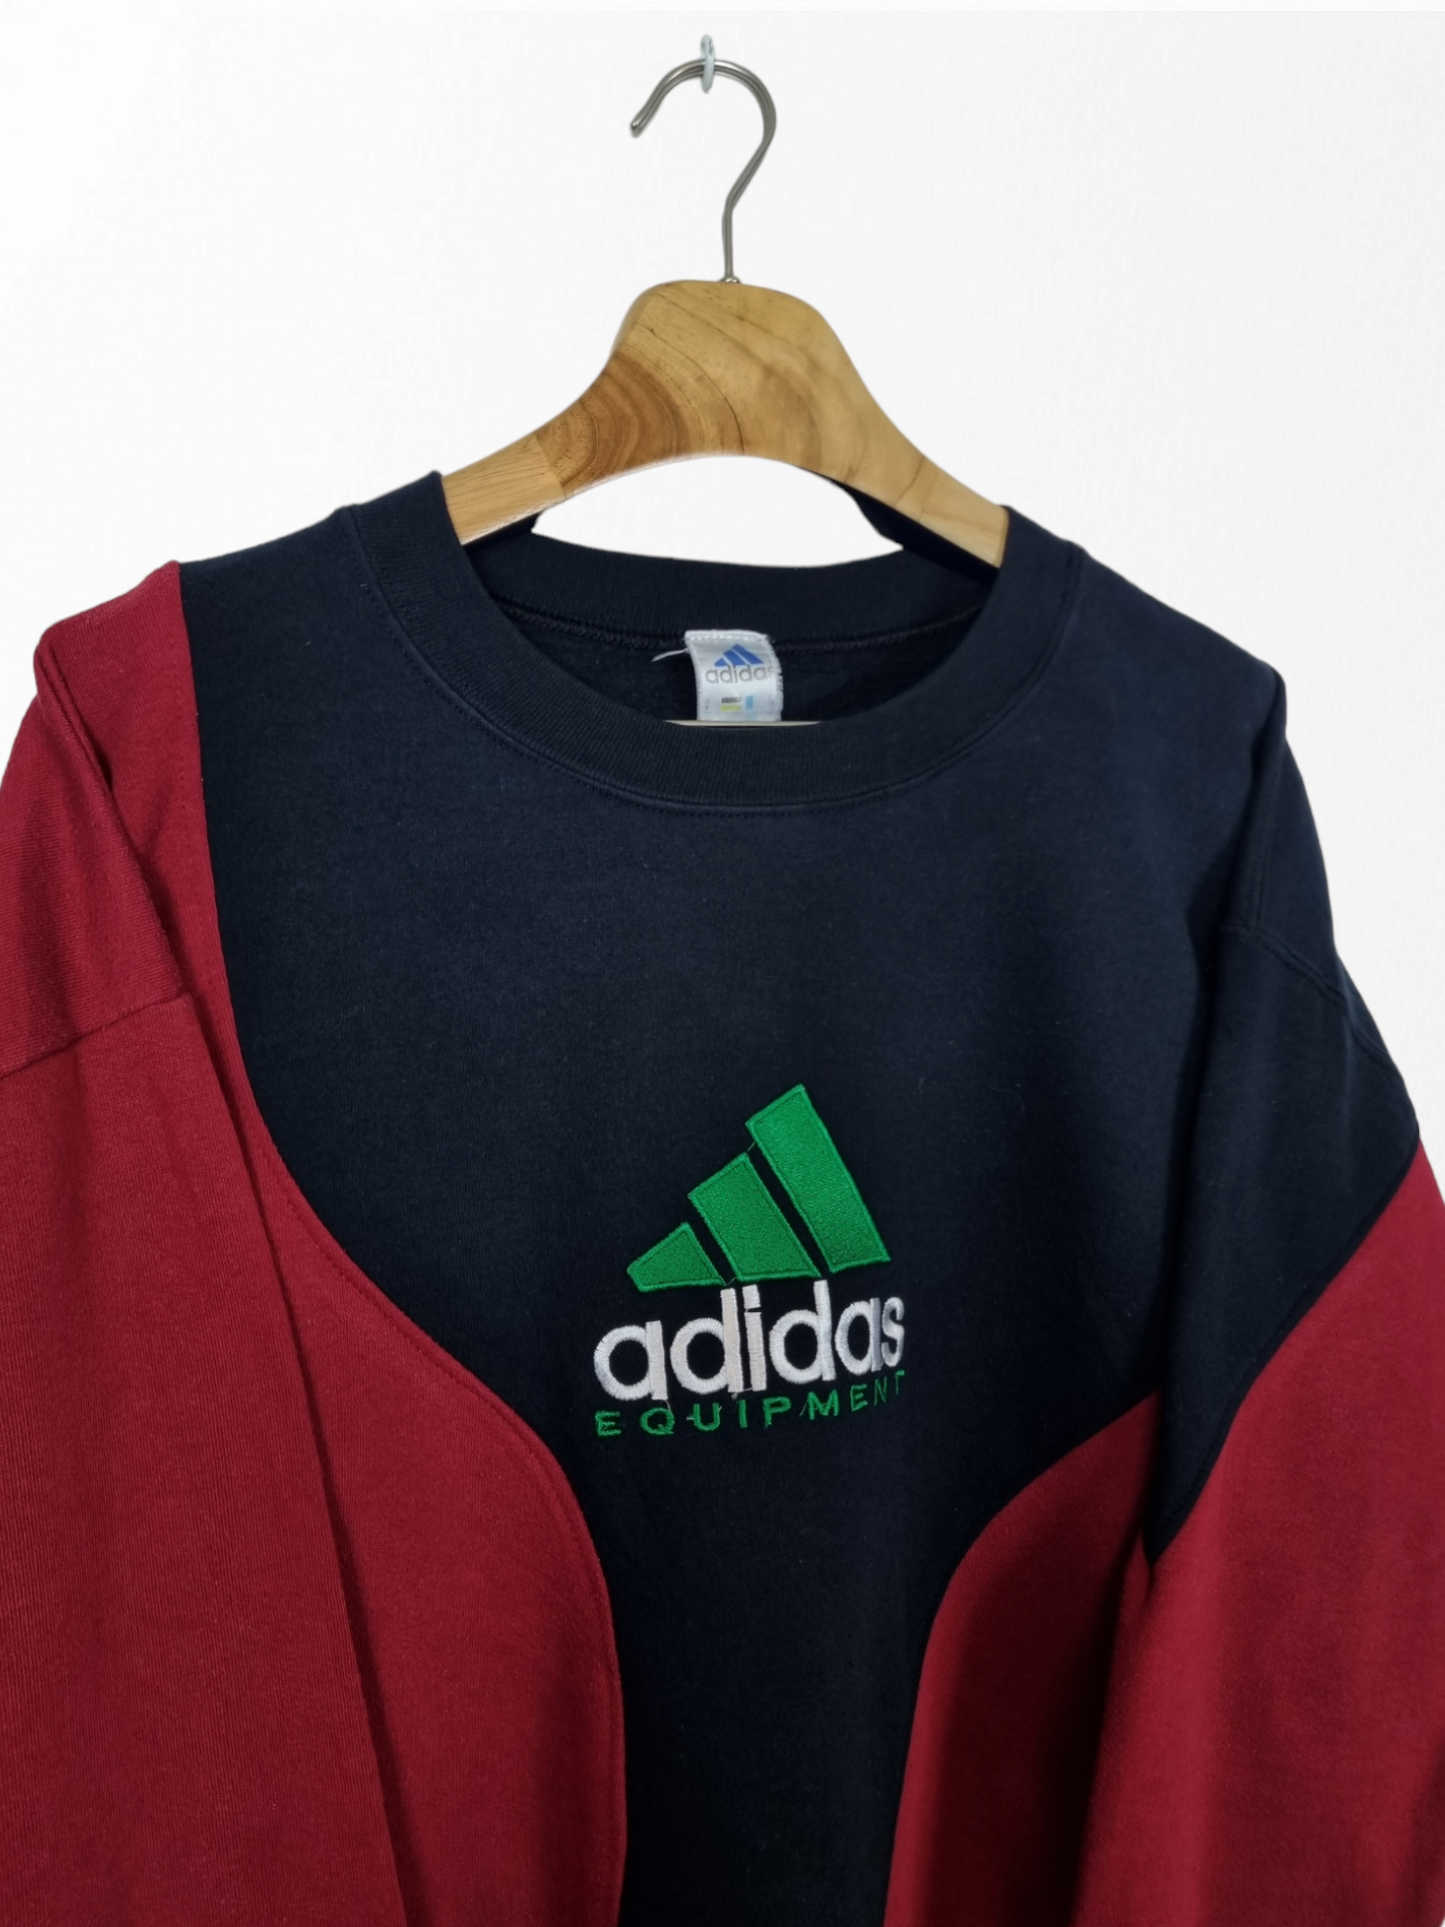 Adidas equipment sweater maat M